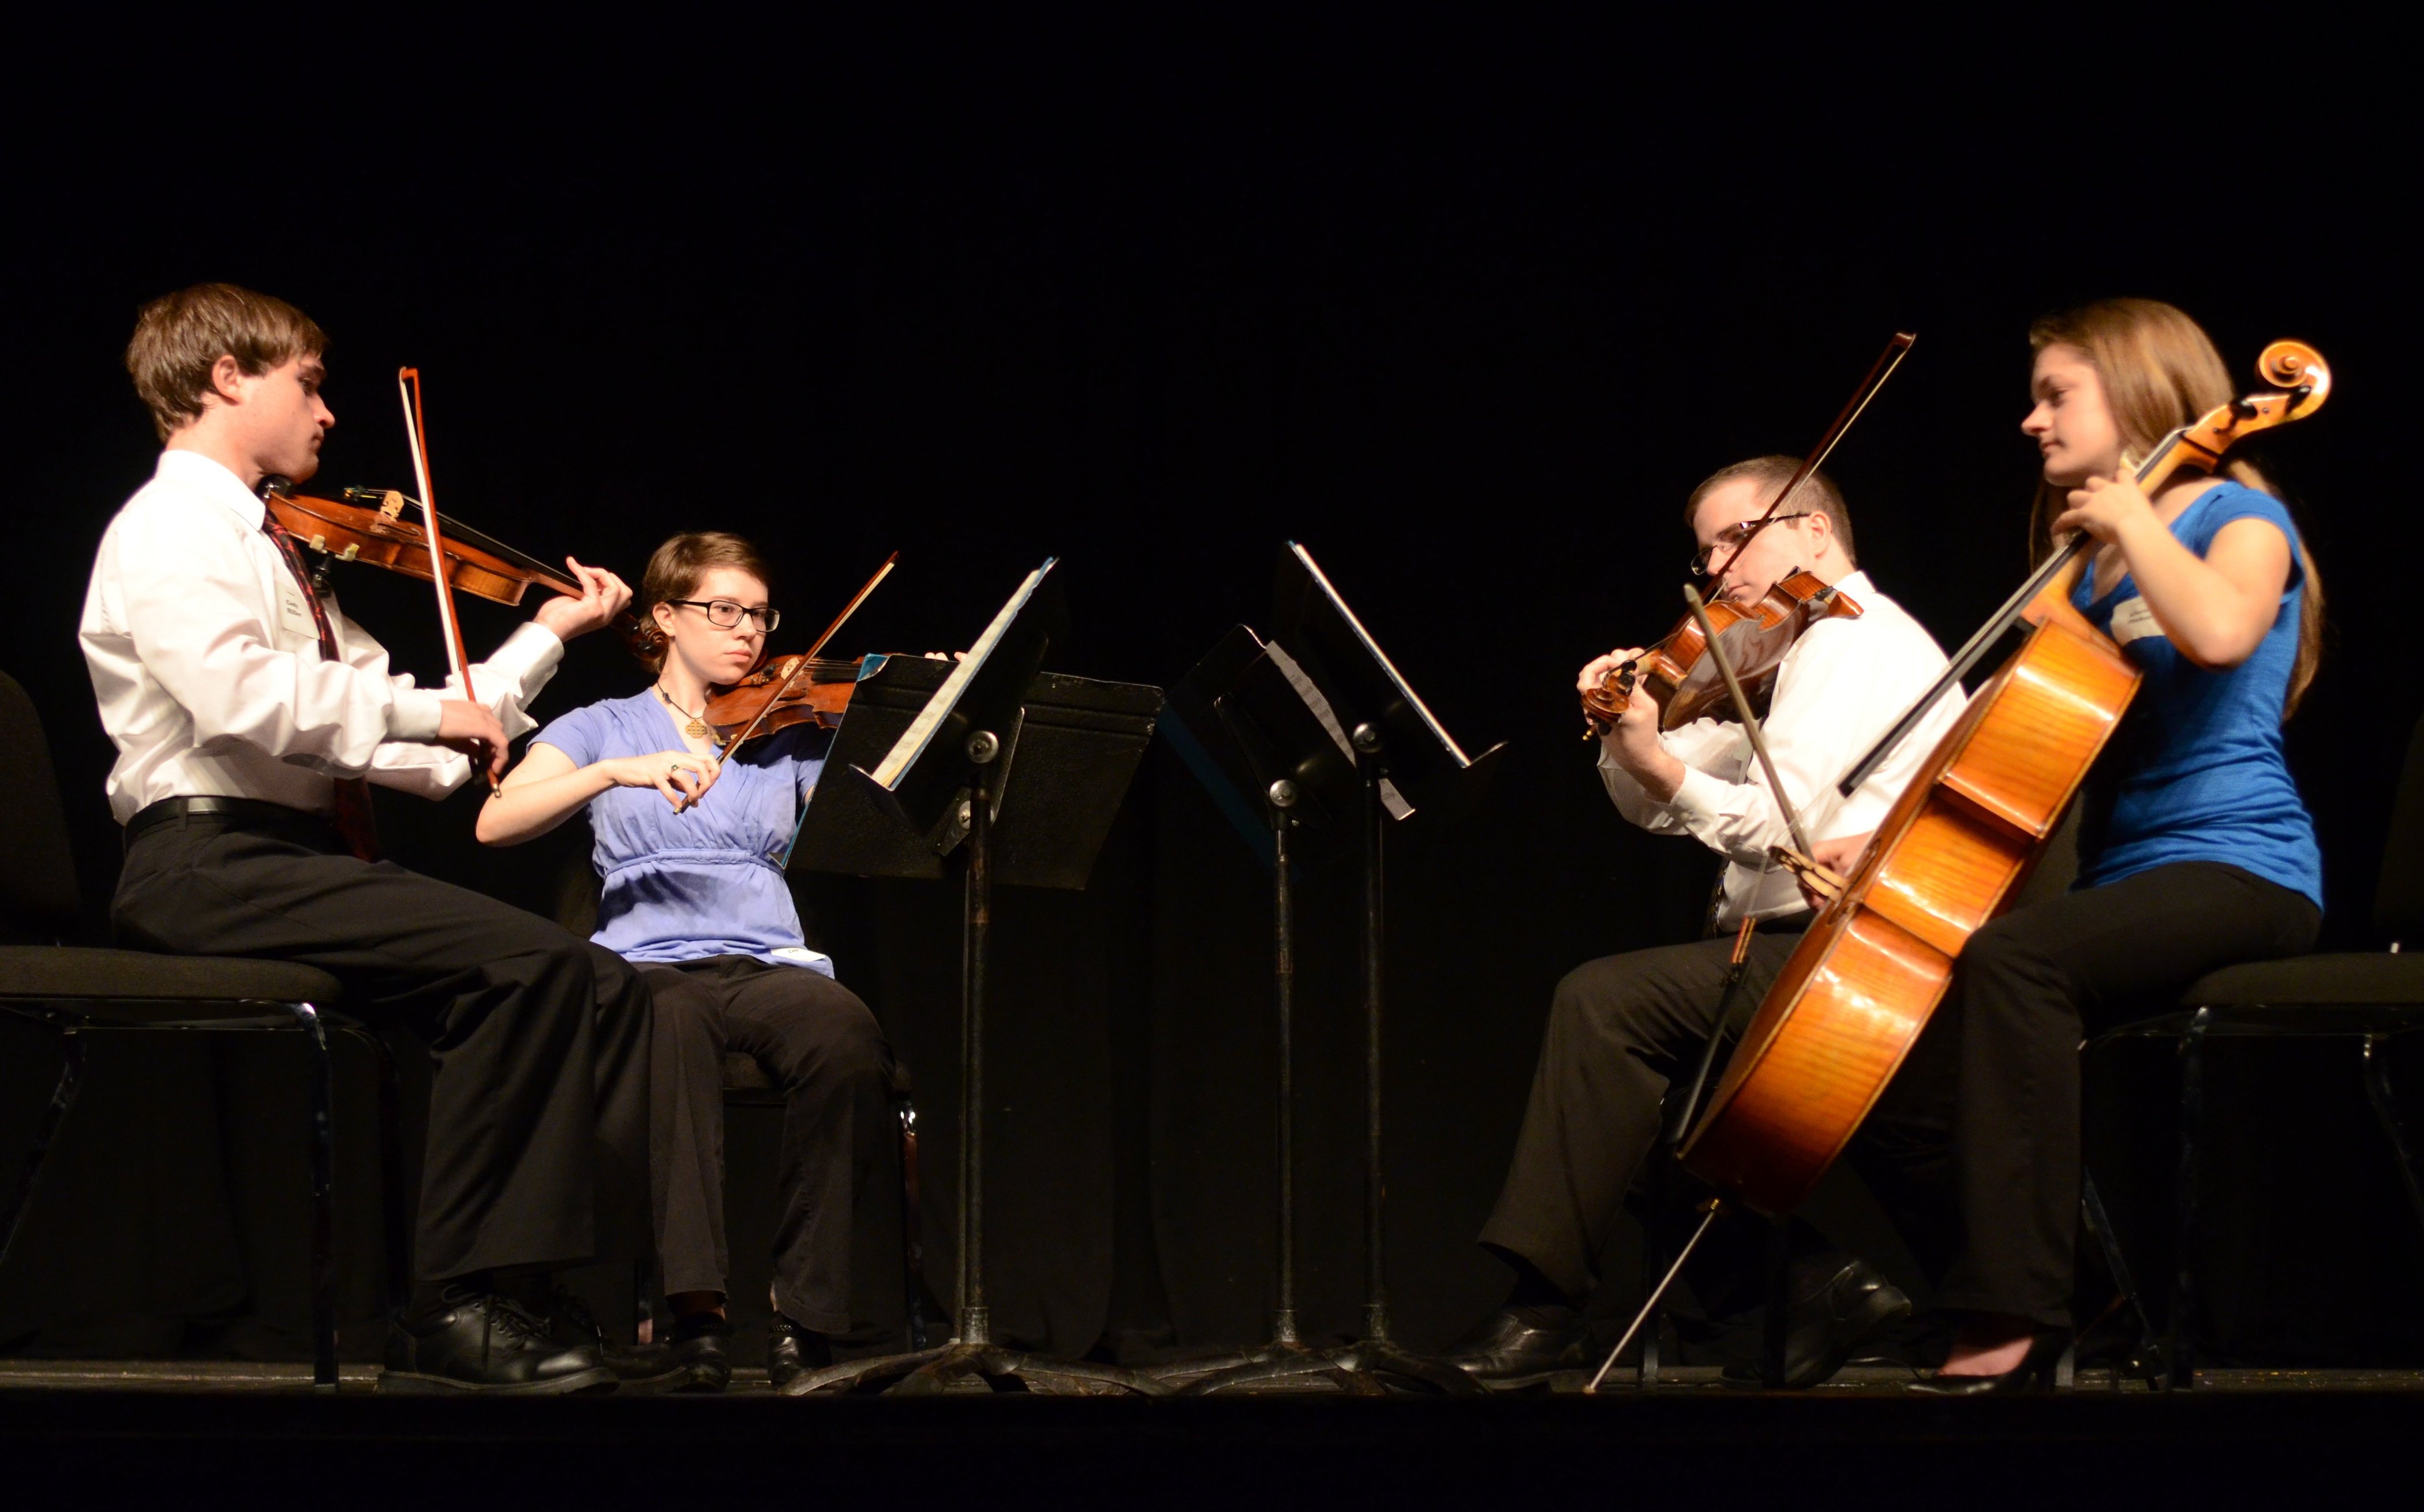 string quartet performs